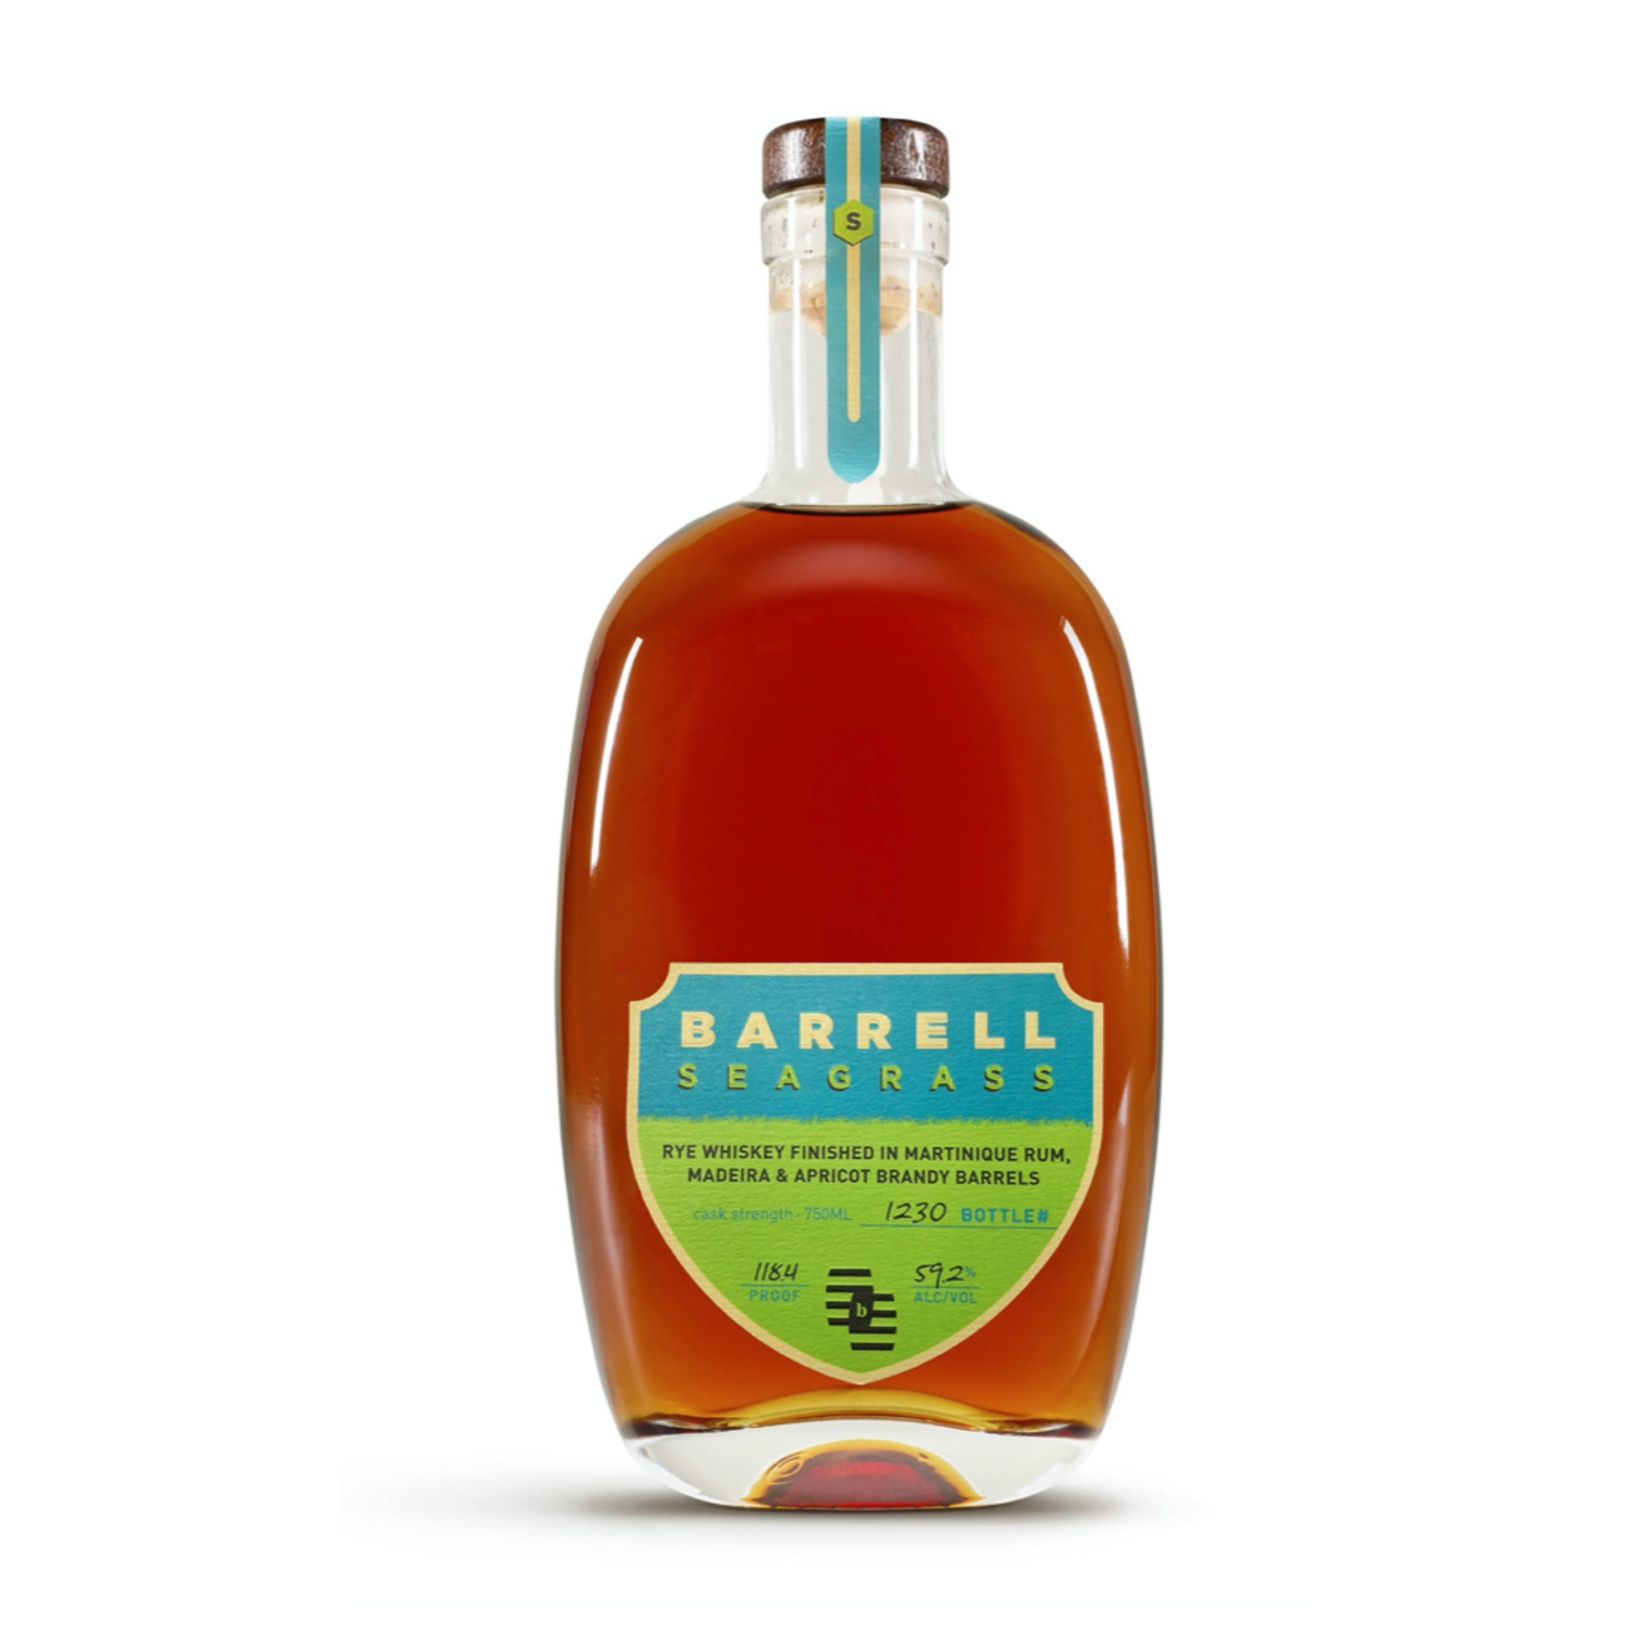 Barrell, Seagrass Rye Whiskey